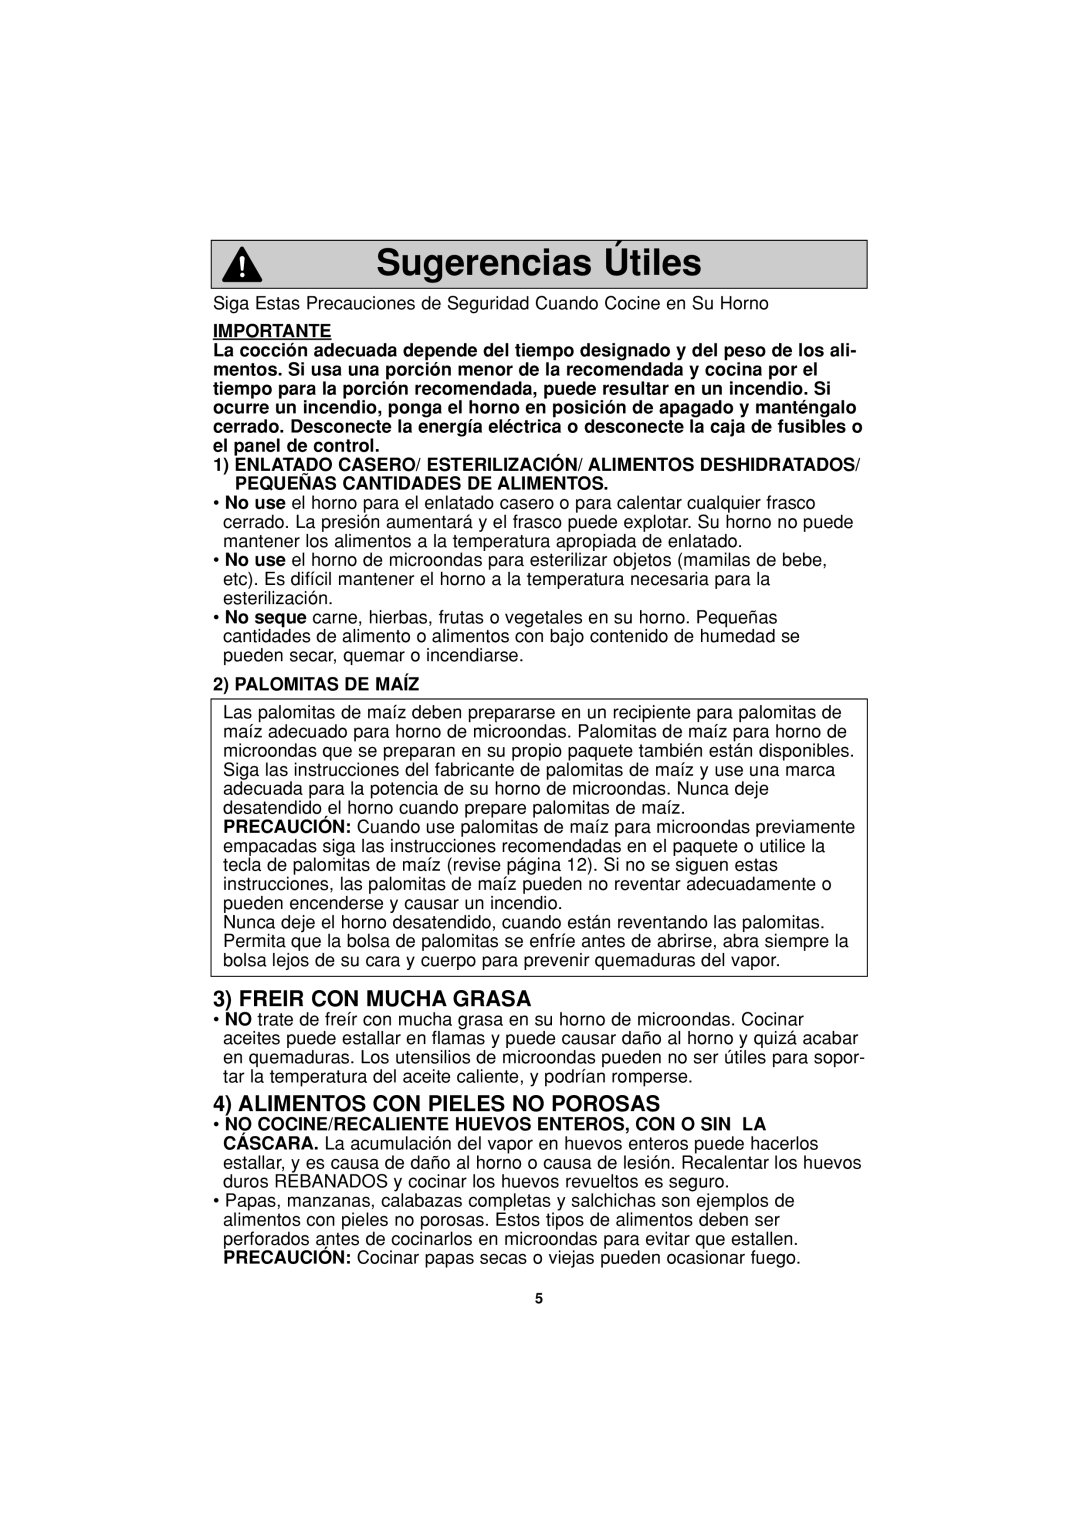 Panasonic NN-S334 important safety instructions Sugerencias Útiles, Freir Con Mucha Grasa, Alimentos Con Pieles No Porosas 